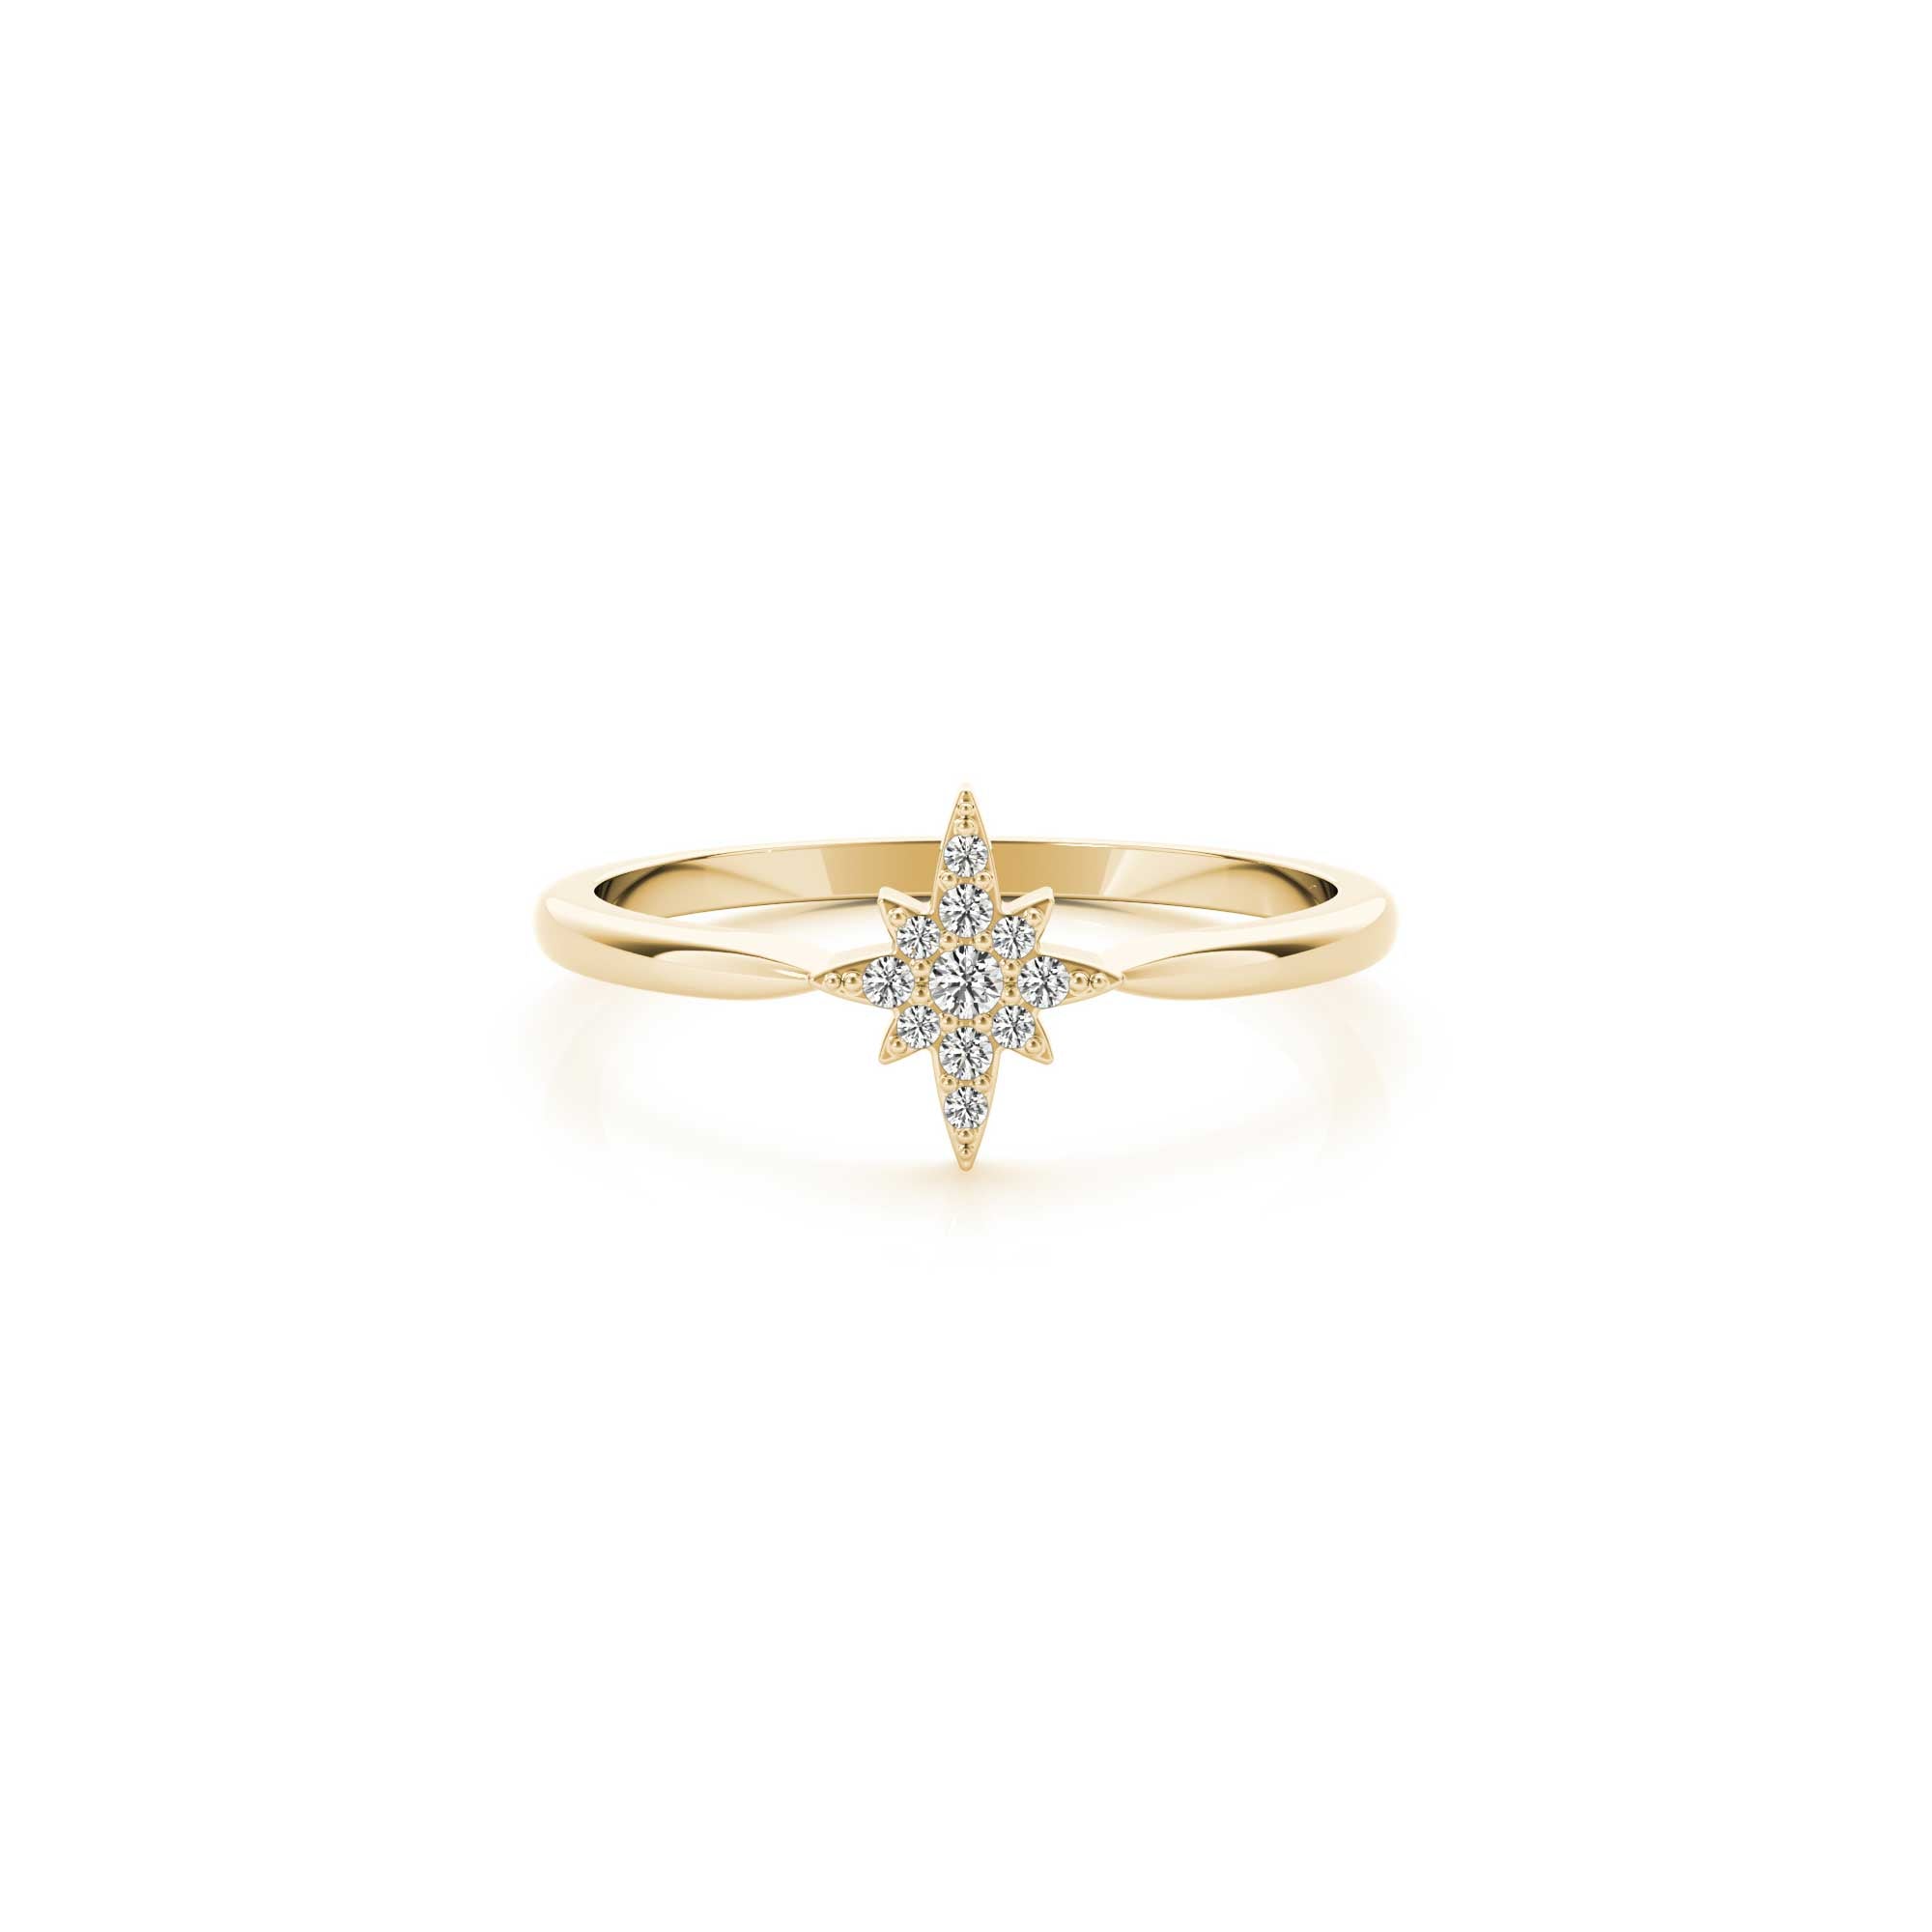 The Vega Diamond Ring